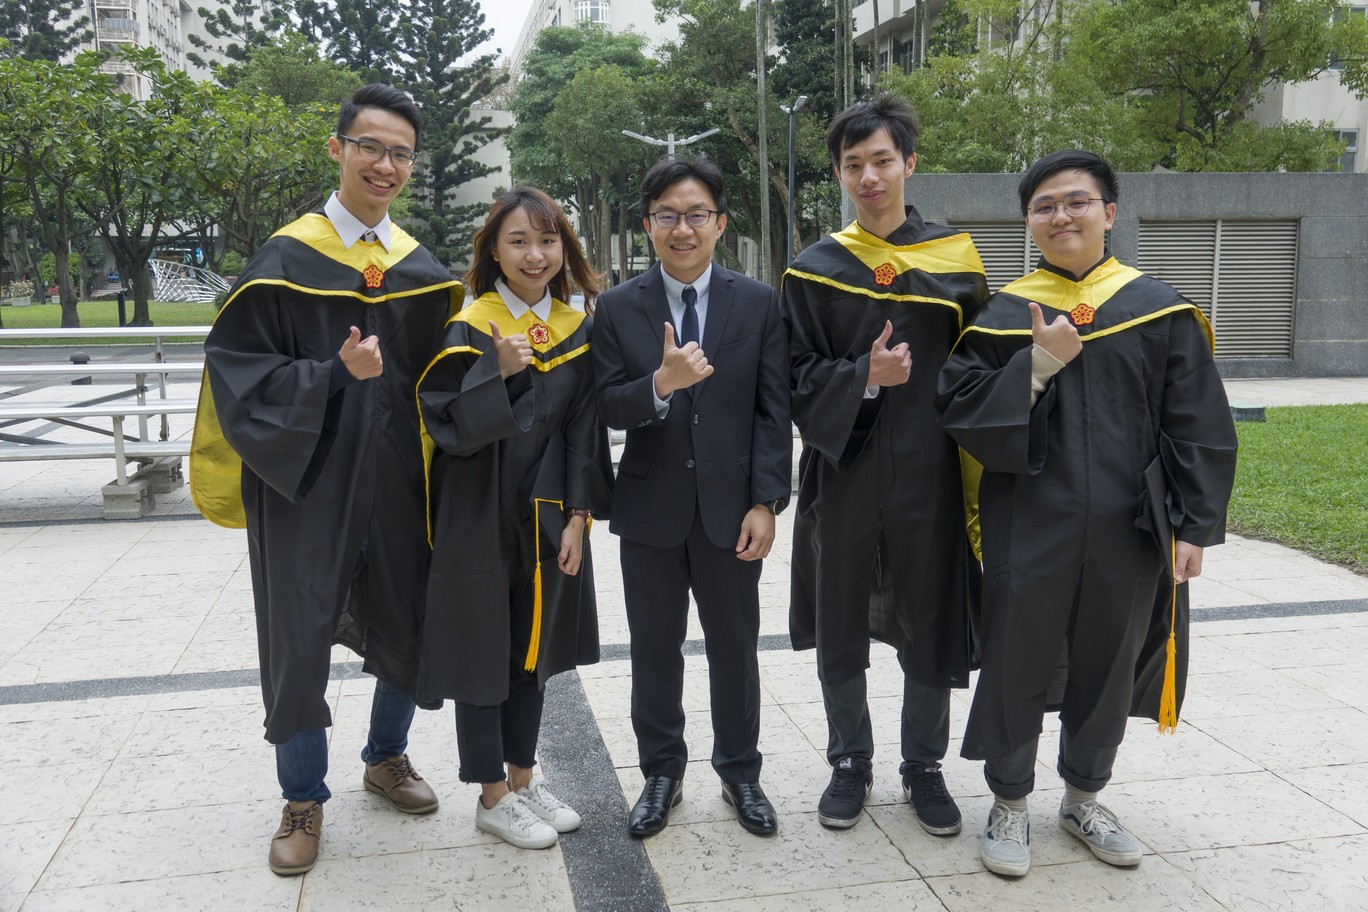 2019 Graduation group photo